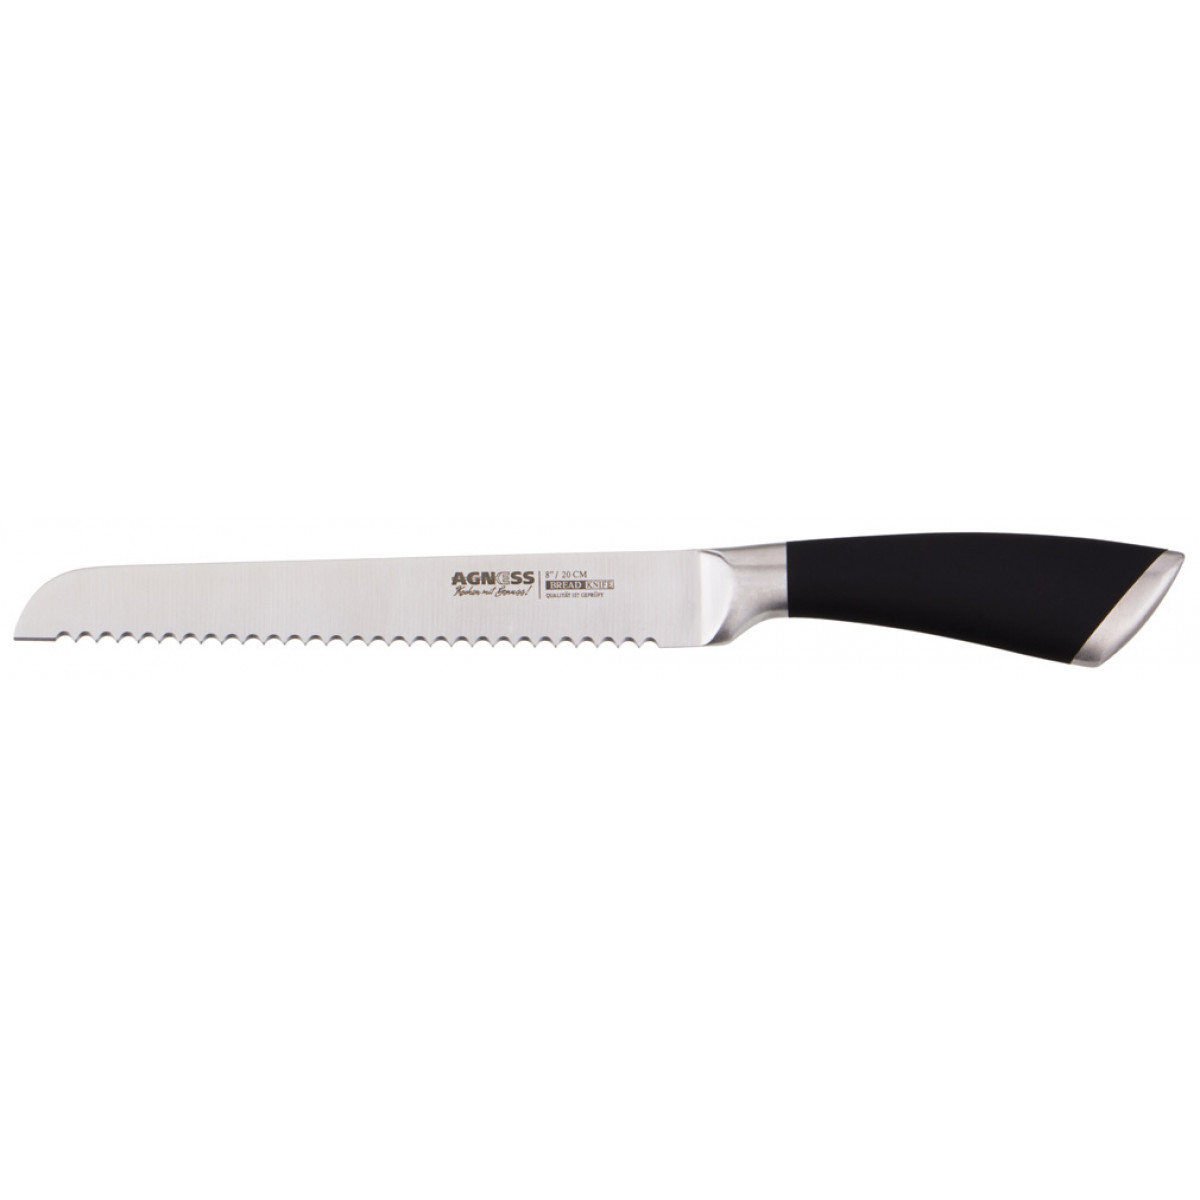 Нож для хлеба Lesly (20 см), размер 20 см ags299471 Нож для хлеба Lesly (20 см) - фото 1